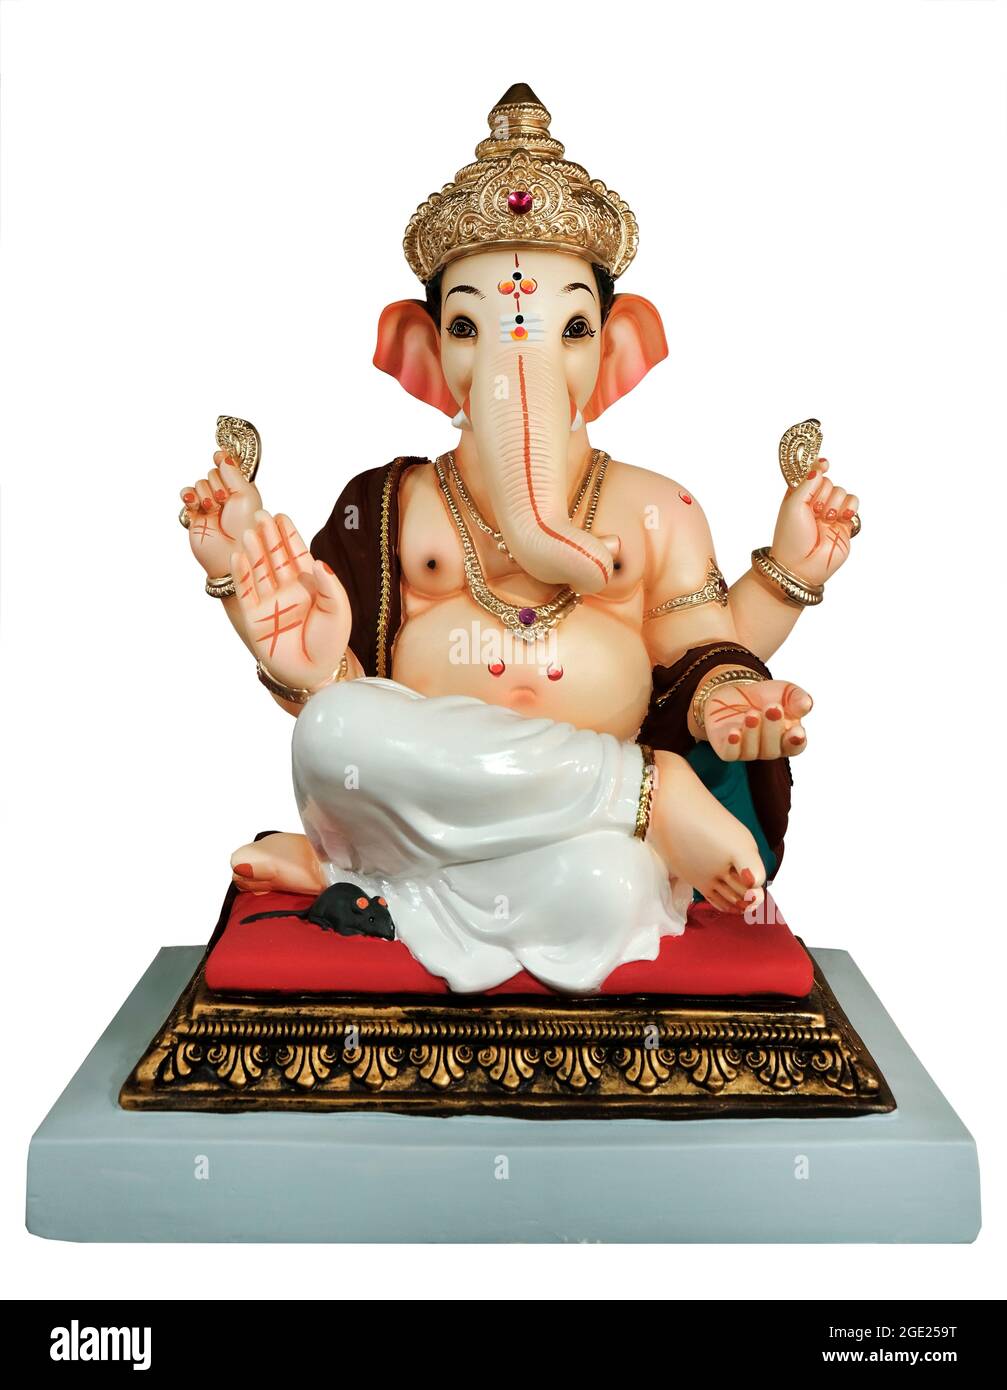 Hindu god wallpaper hi-res stock photography and images - Alamy